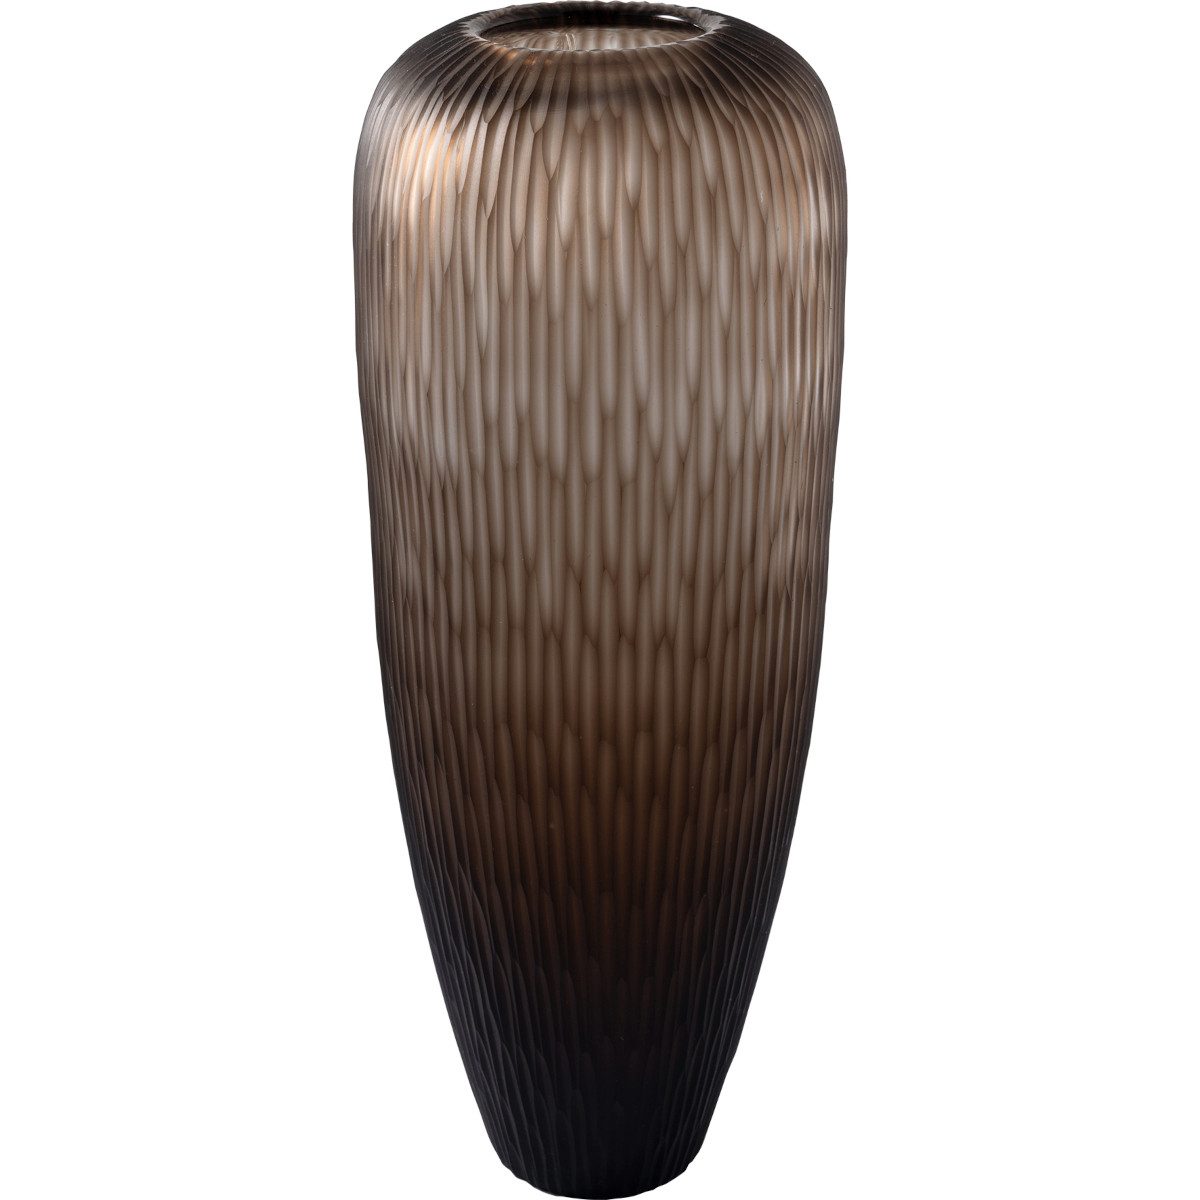 Greengate Dekovase Cut Vase xlarge brown 16,5x45cm (Vasen)